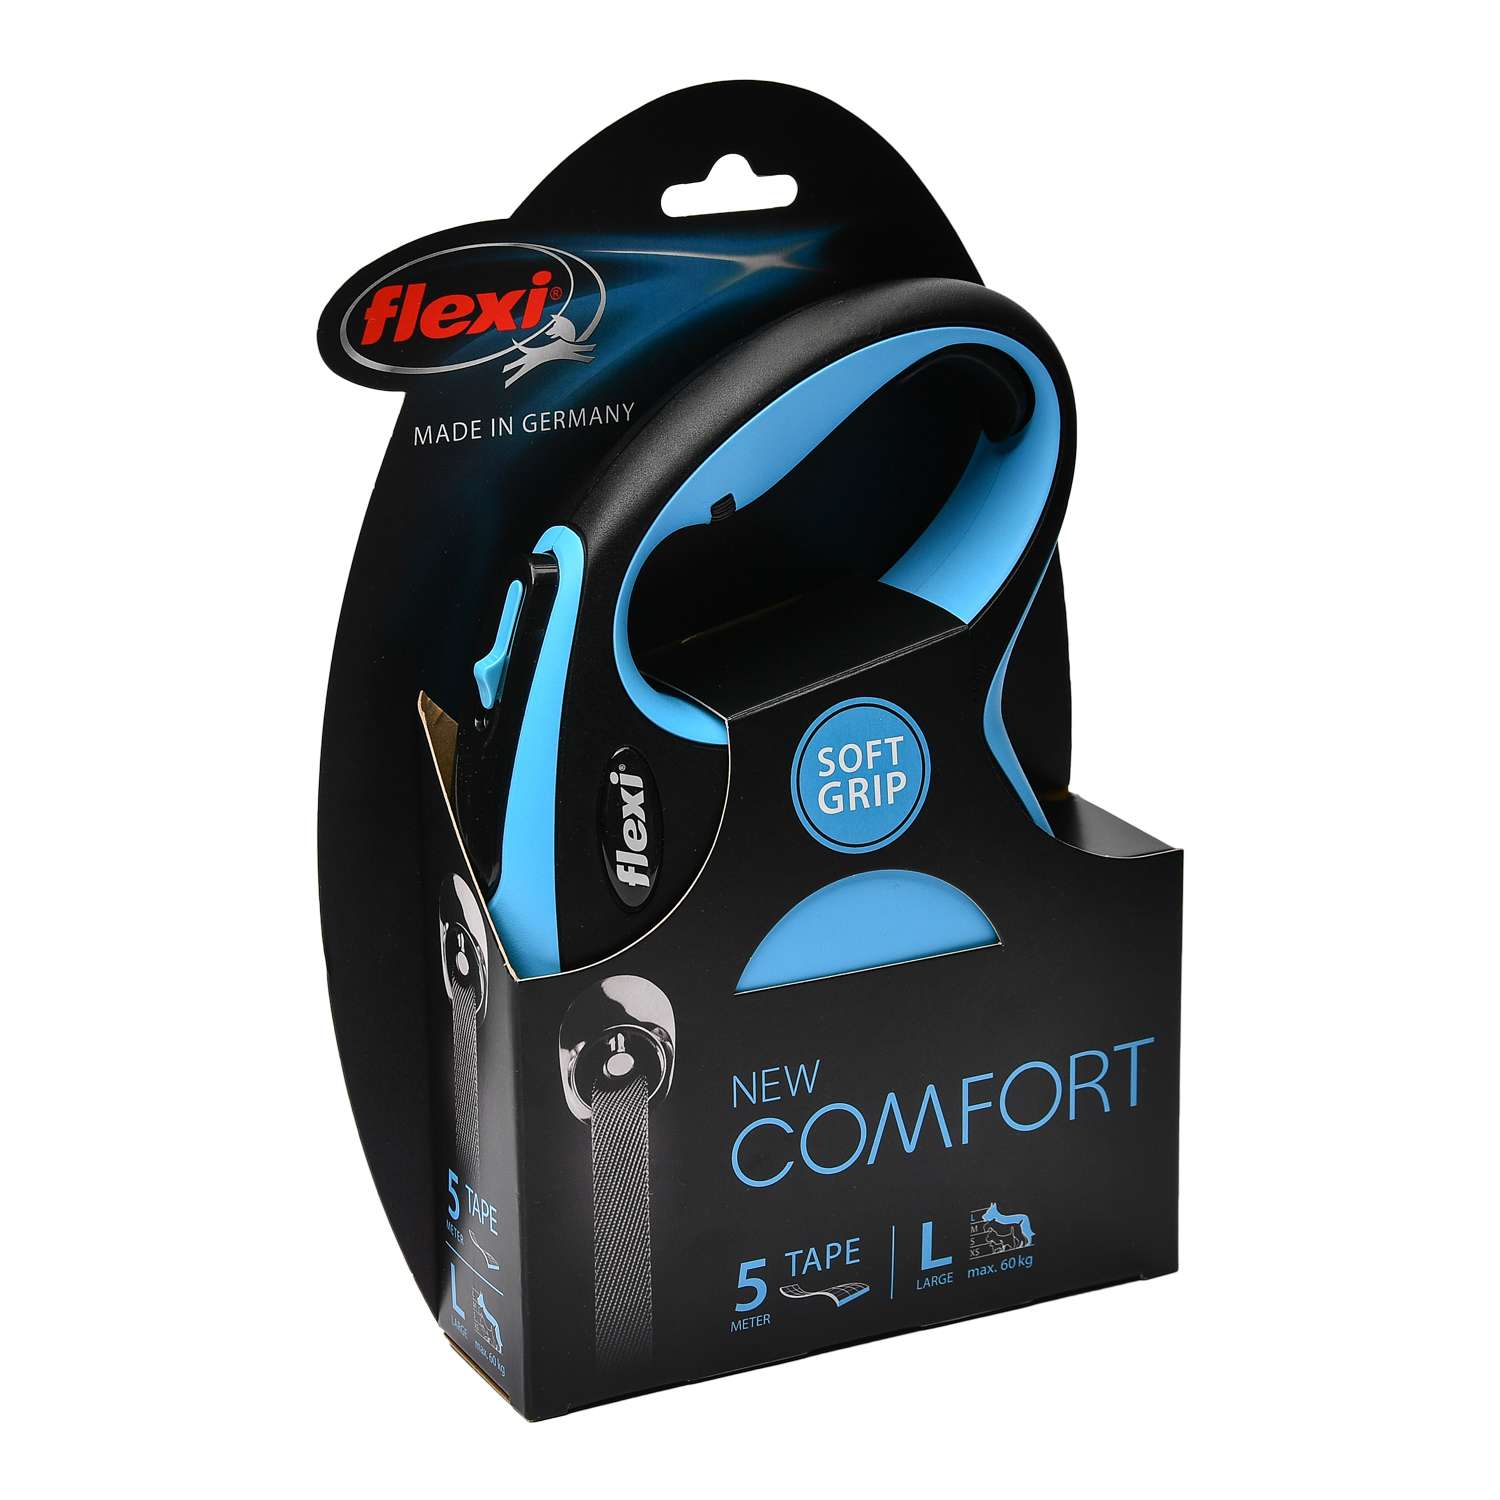 Рулетка Flexi New Comfort L лента 5м до 60кг Черный-Синий - фото 2